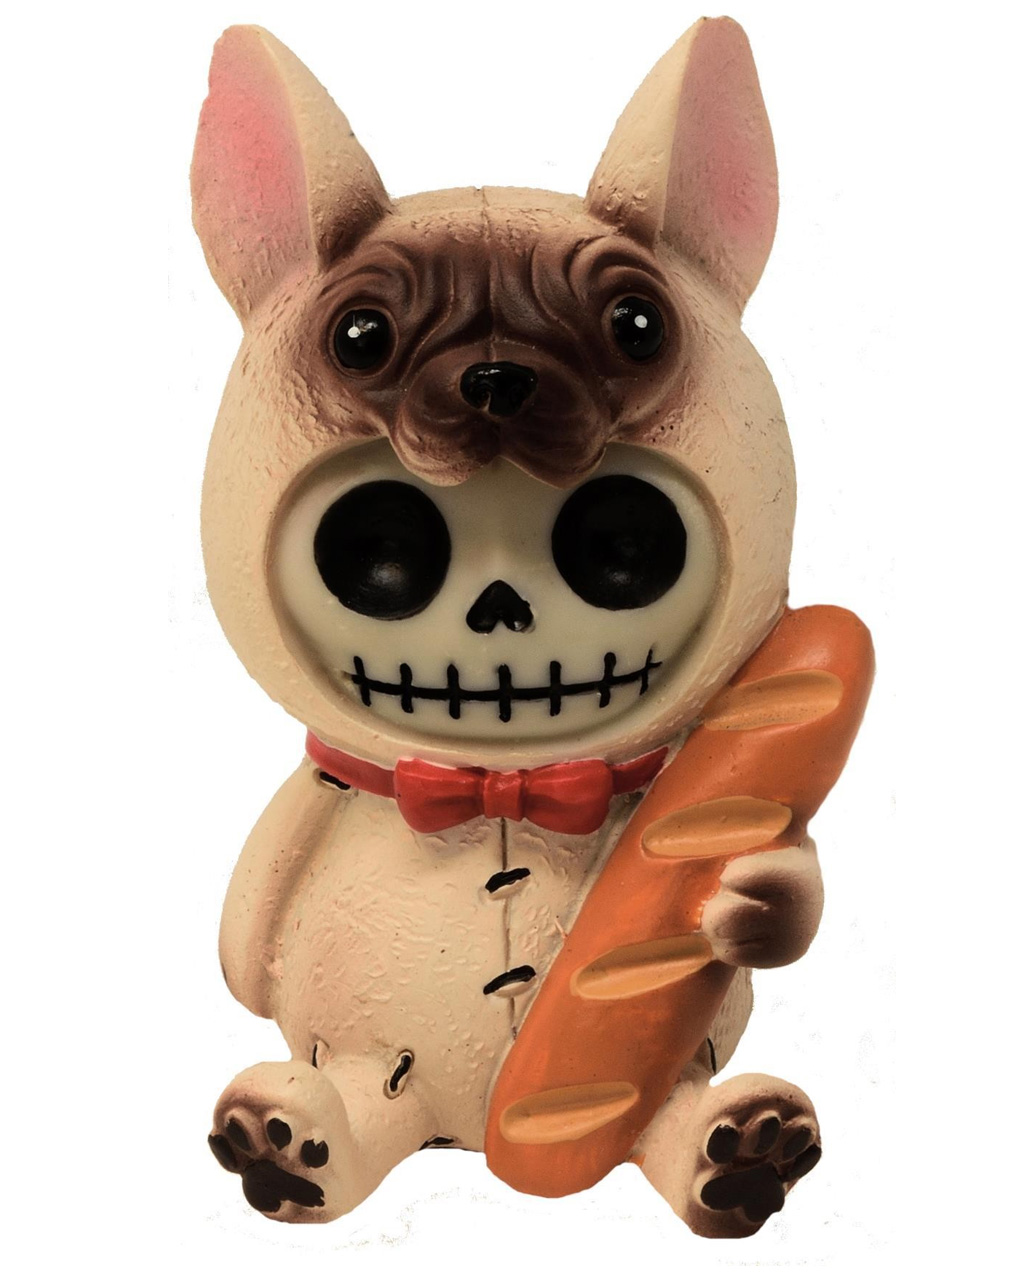 French Bulldog - Furrybones Figure Small, buy skeleton figures